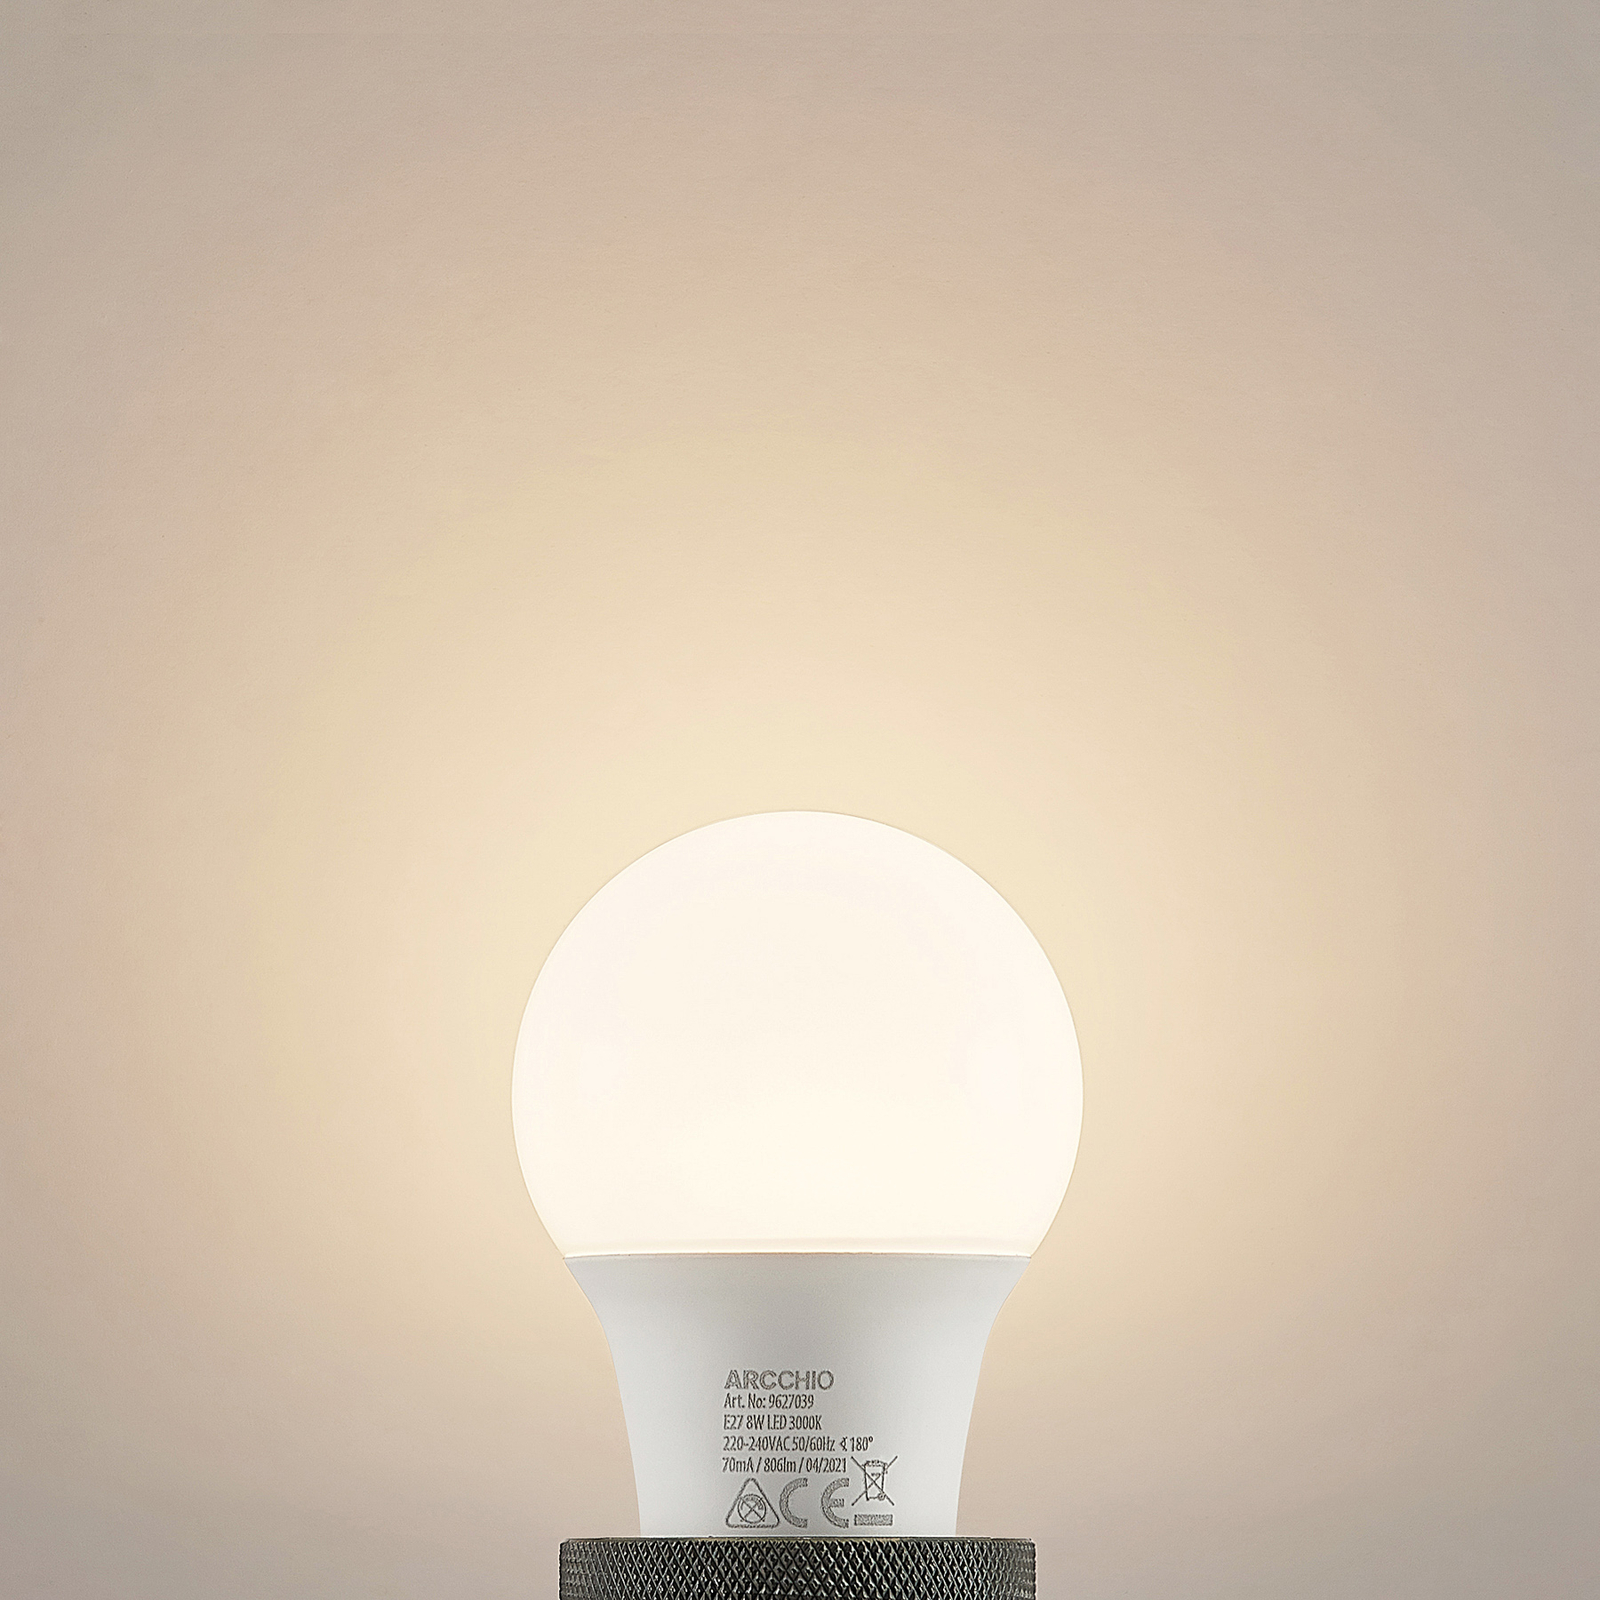 LED-Lampe E27 A60 8W 3.000K opal, 10er-Set